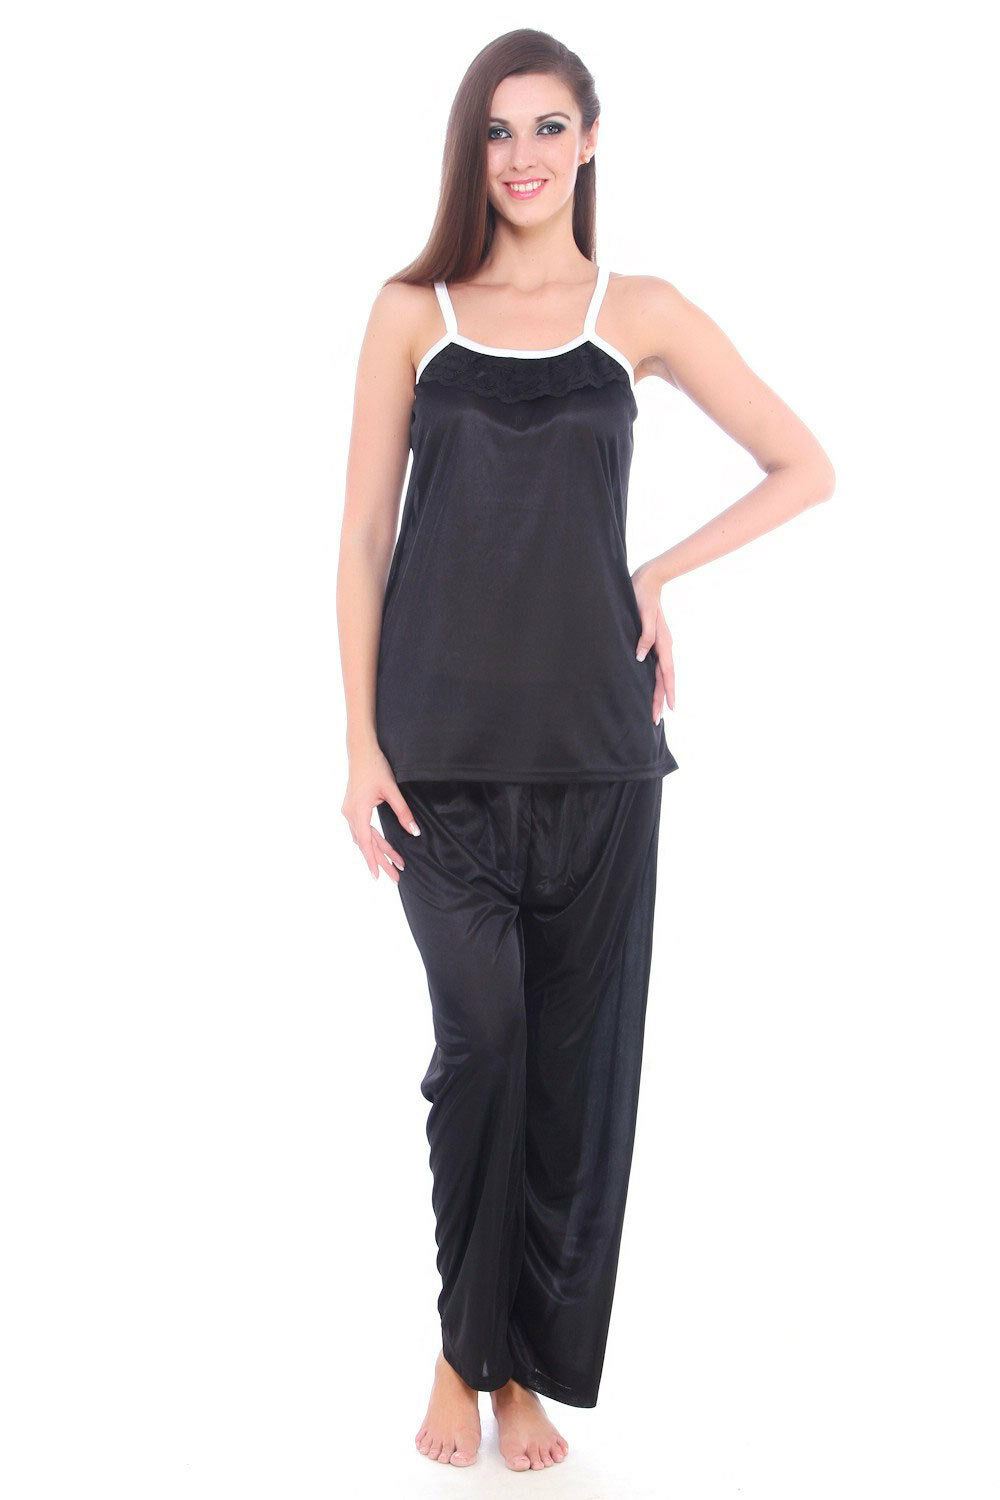 Black / One Size: Regular (8-14) Satin Spaghetti Top & Pyjama Nightwear Set The Orange Tags